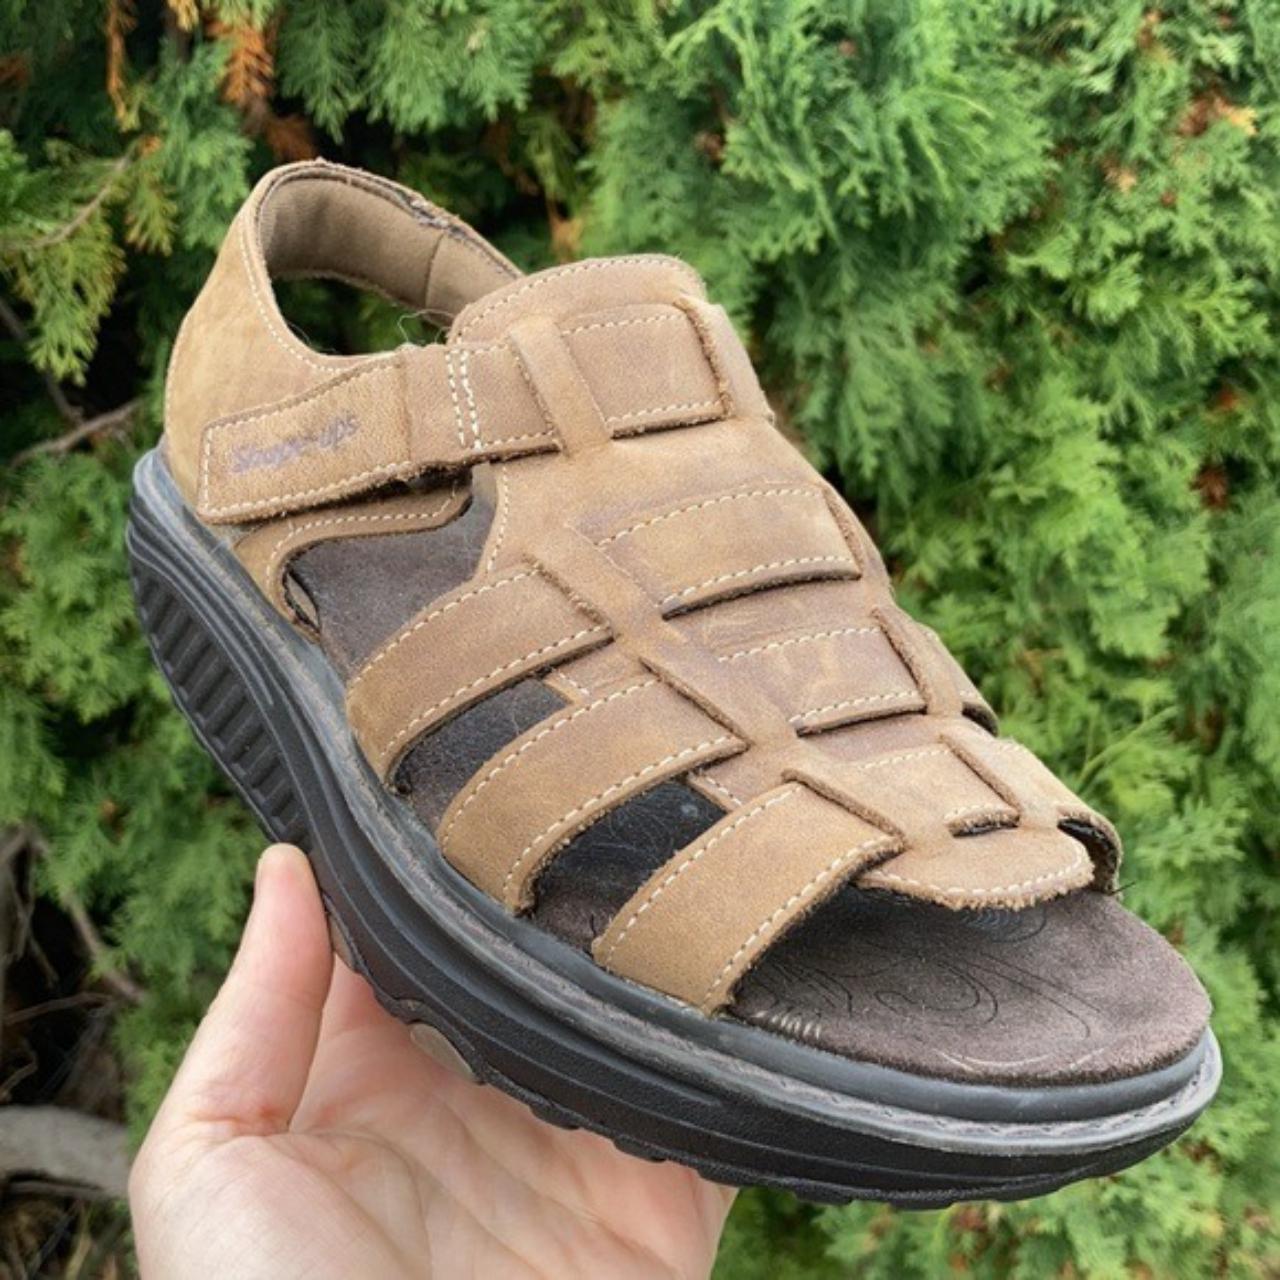 sandals skechers shape ups